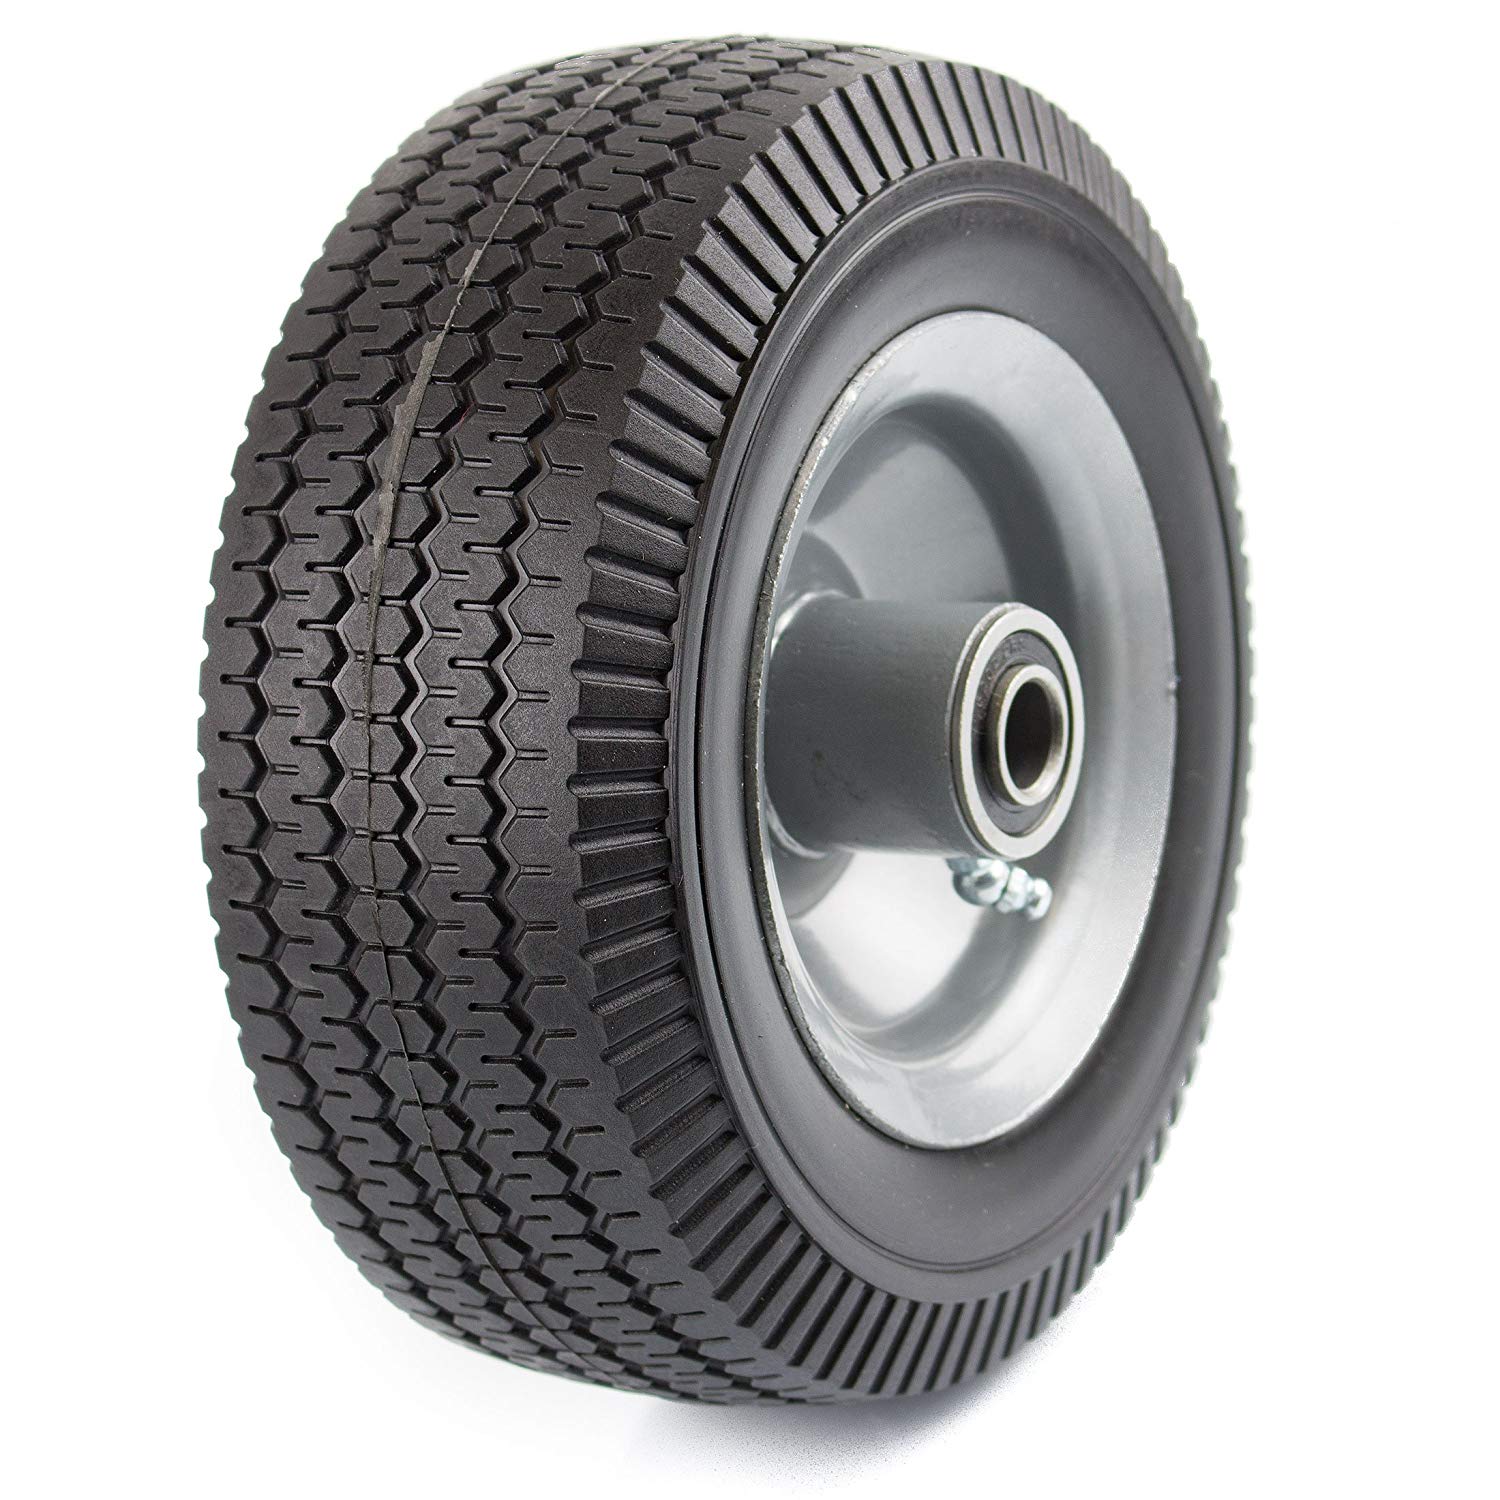 NK Heavy Duty Solid Rubber Flat Free Tubeless Hand Truck/Utility Tire  Wheel, 4.10/3.50-4